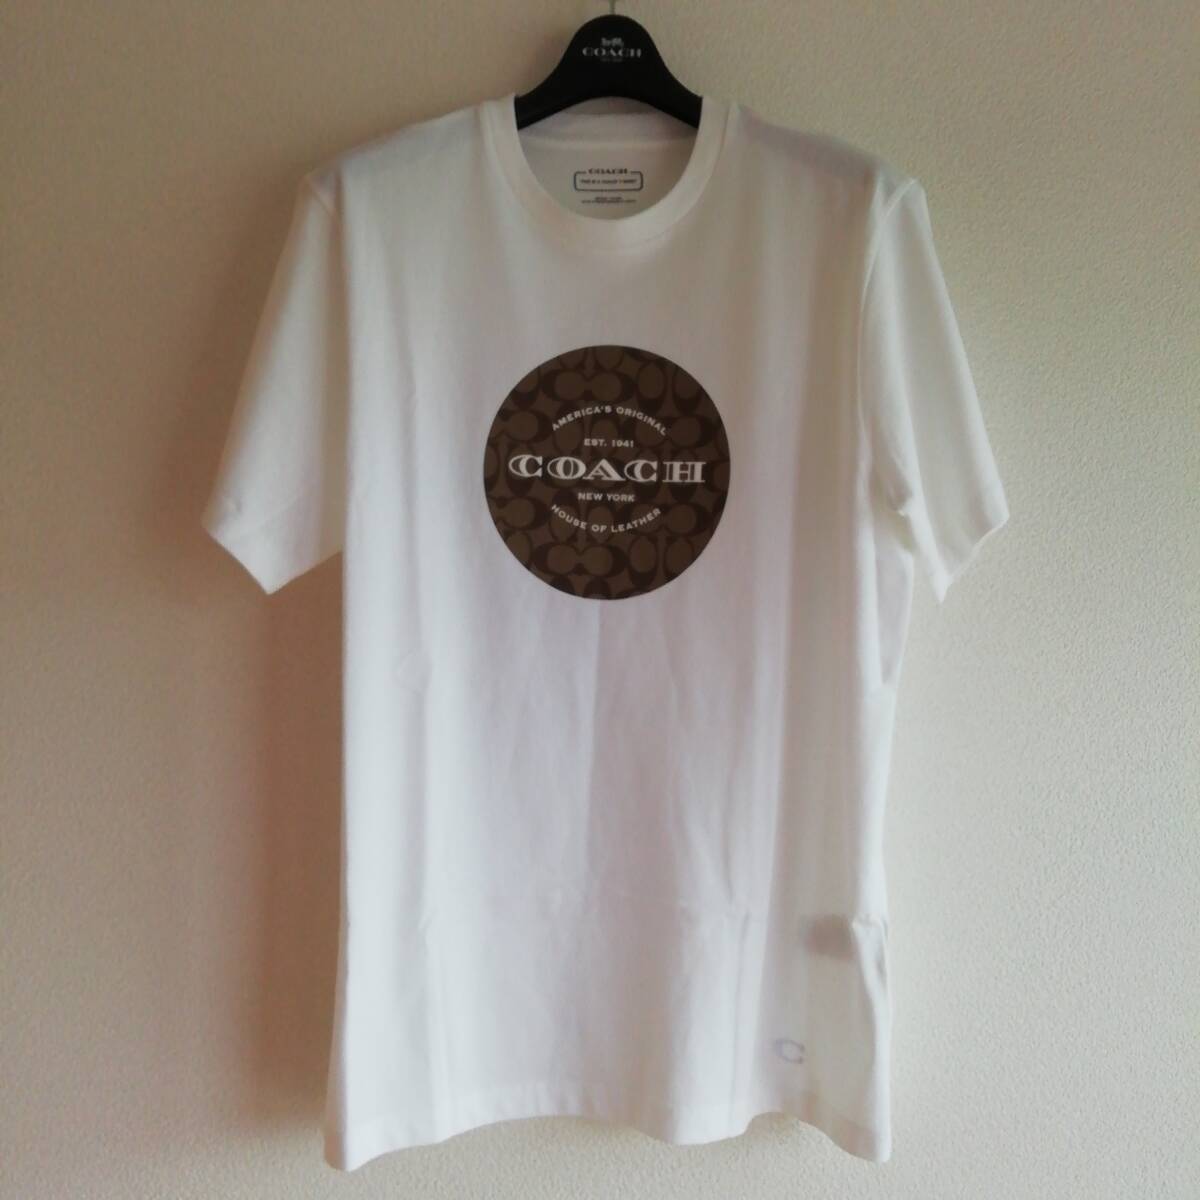 35200 jpy * new goods & regular goods guarantee * Coach COACH* signature * white T-shirt M*C9140